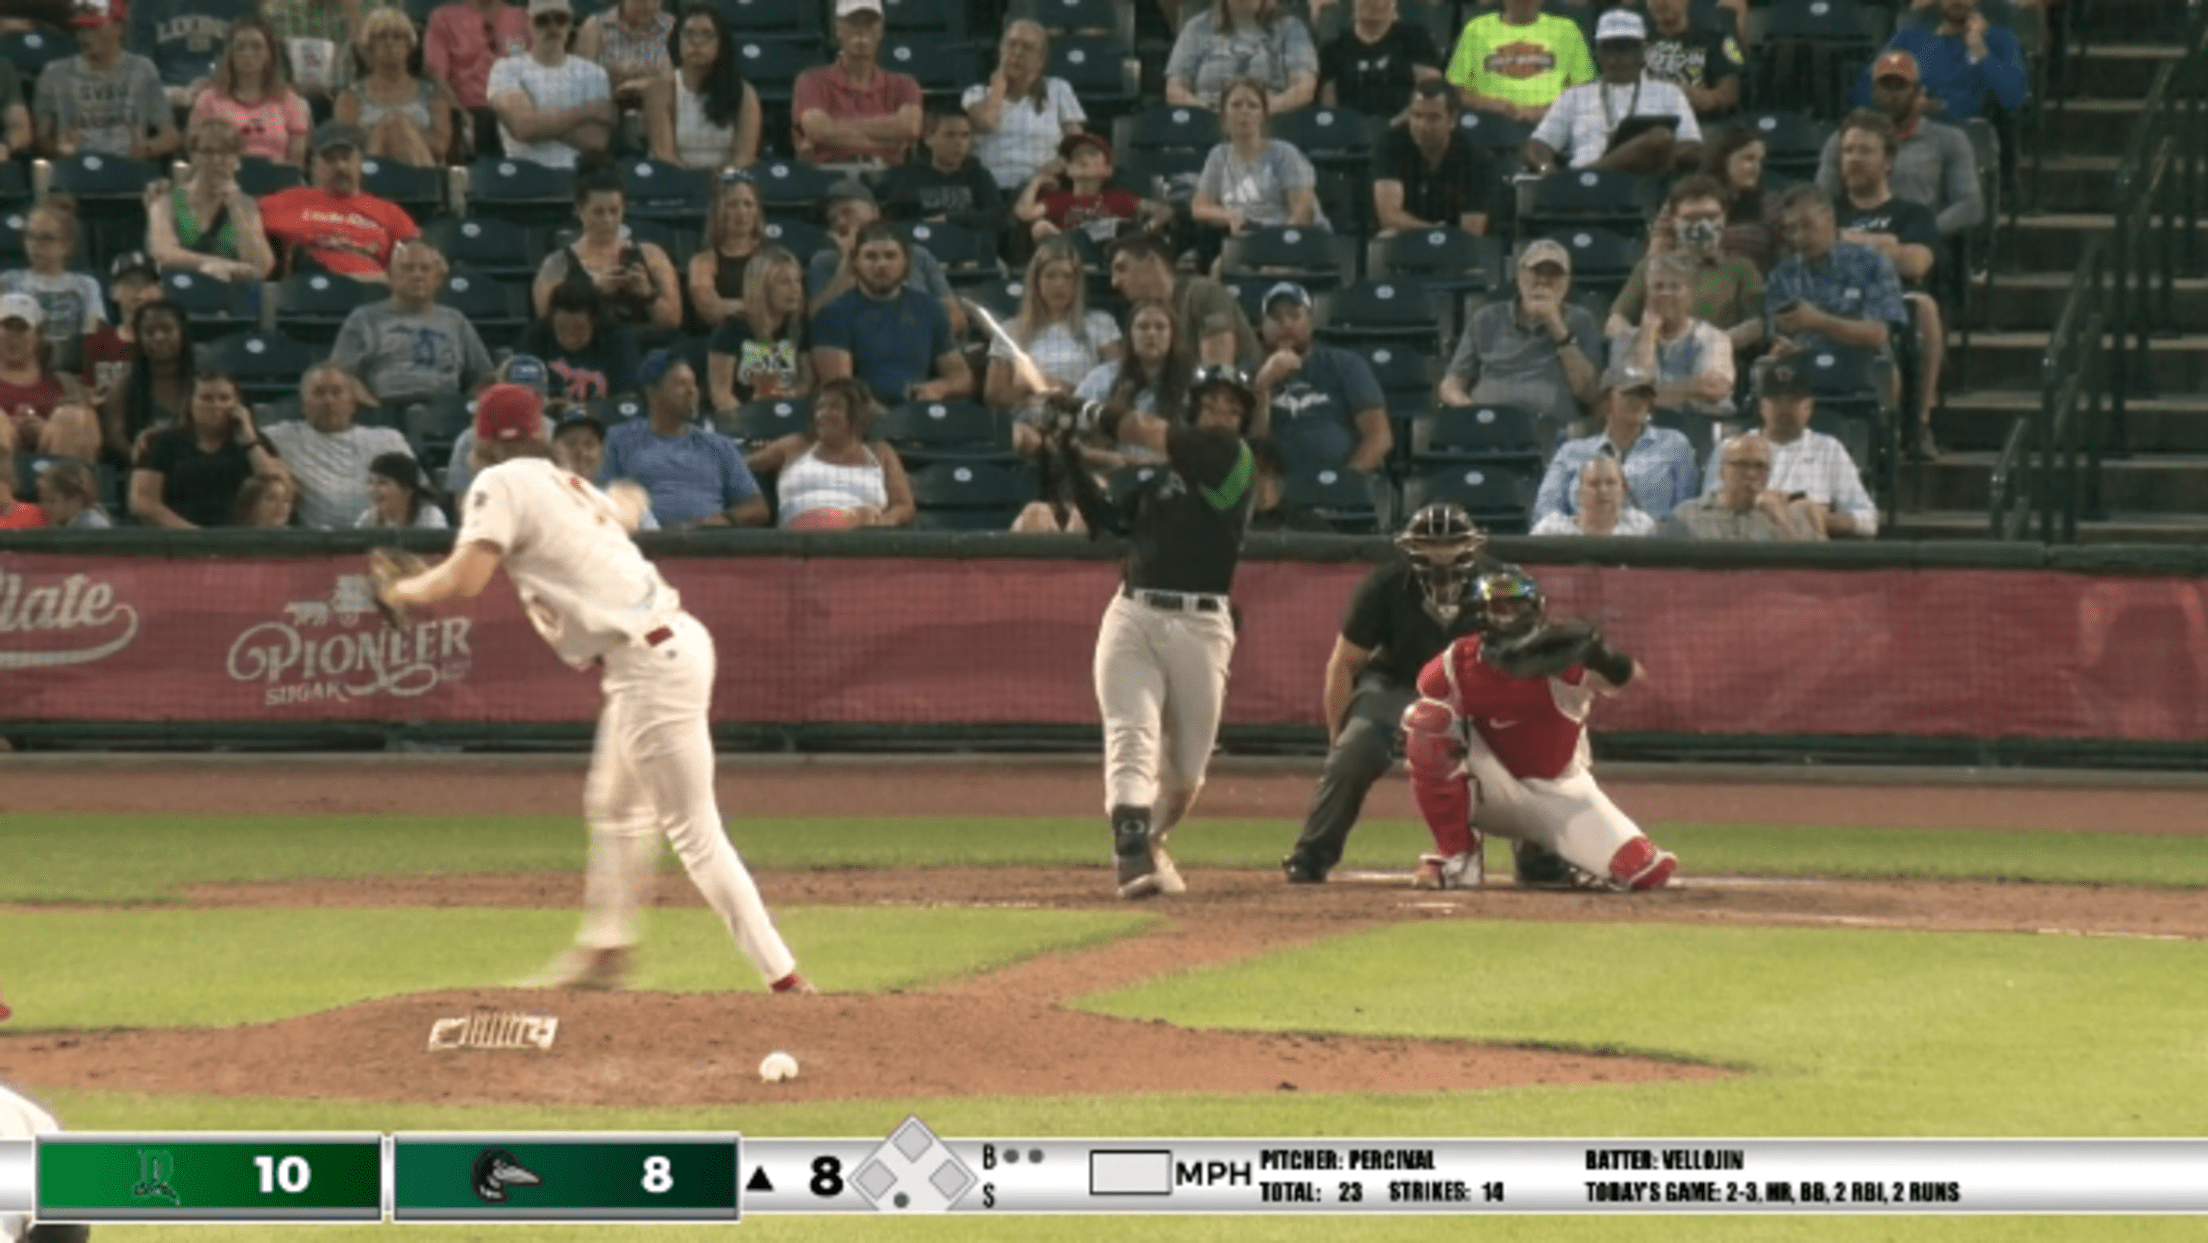 Daniel Vellojin hits two homers